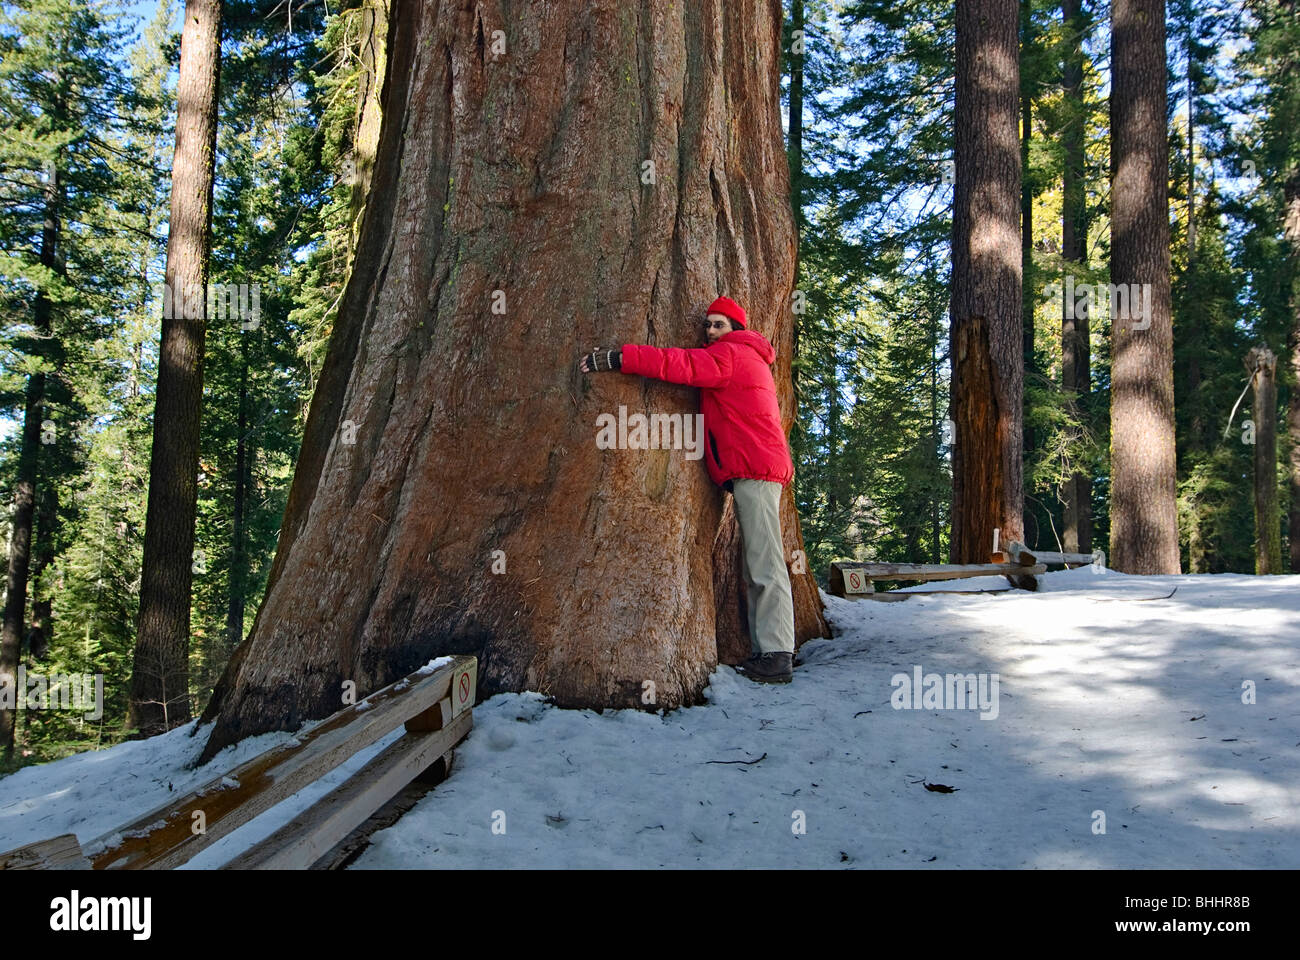 Tree Hugger. Giant Sequoia Trees of Tuolumne Grove in Yosemite National Park. Stock Photo